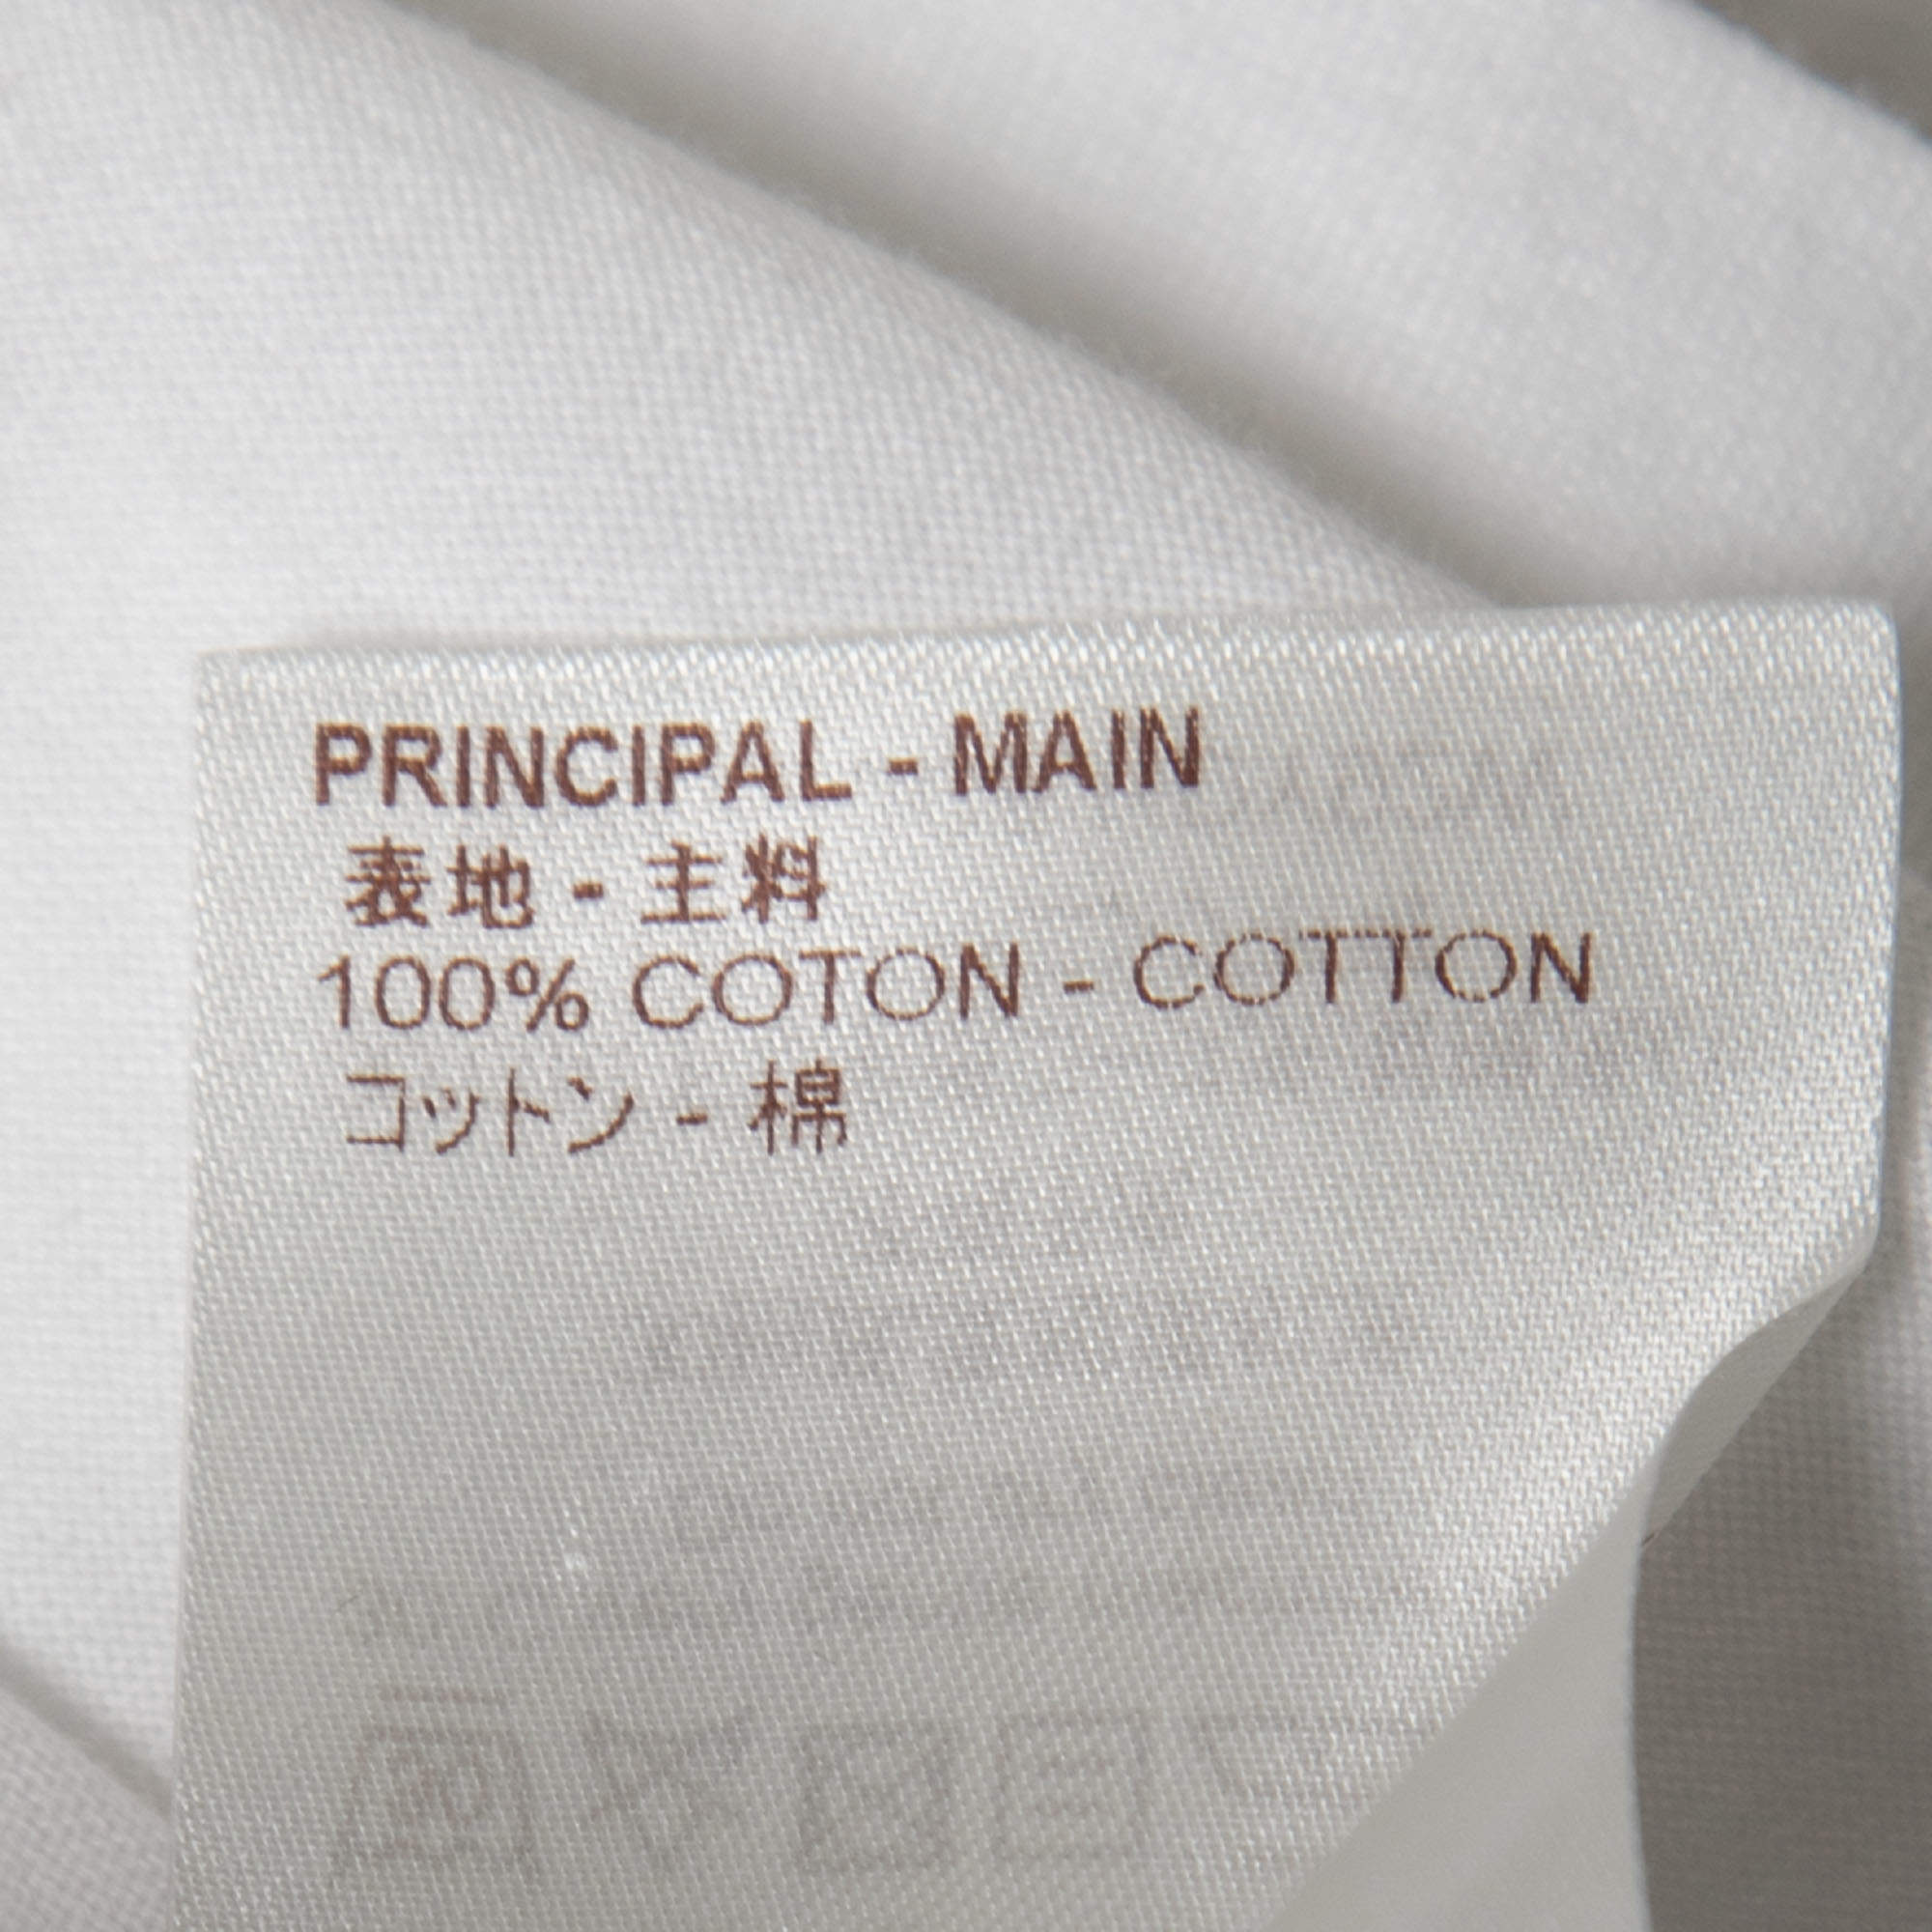 T-shirt Louis Vuitton x Supreme White size M International in Cotton -  16988873